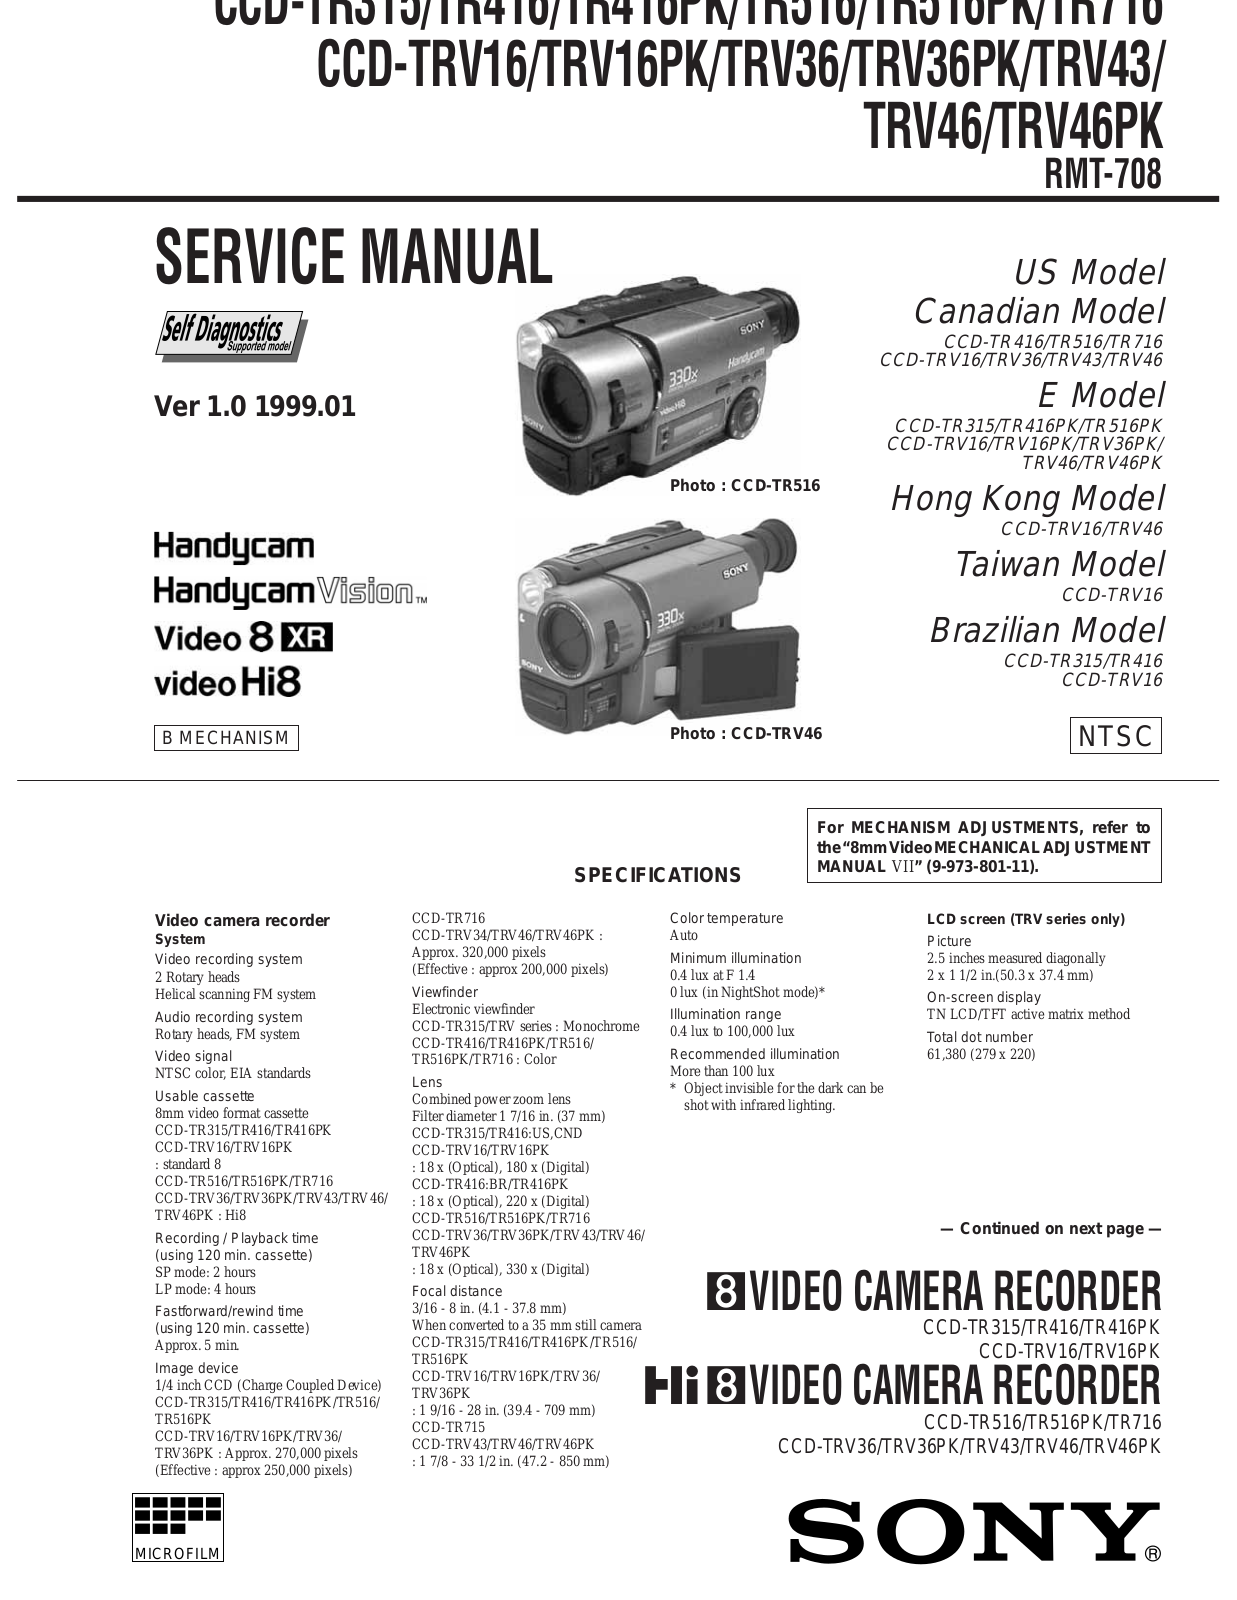 Sony CCD-TRV46PK, CCD-TRV46, CCD-TRV43, CCD-TRV36PK, CCD-TRV36 Service Manual